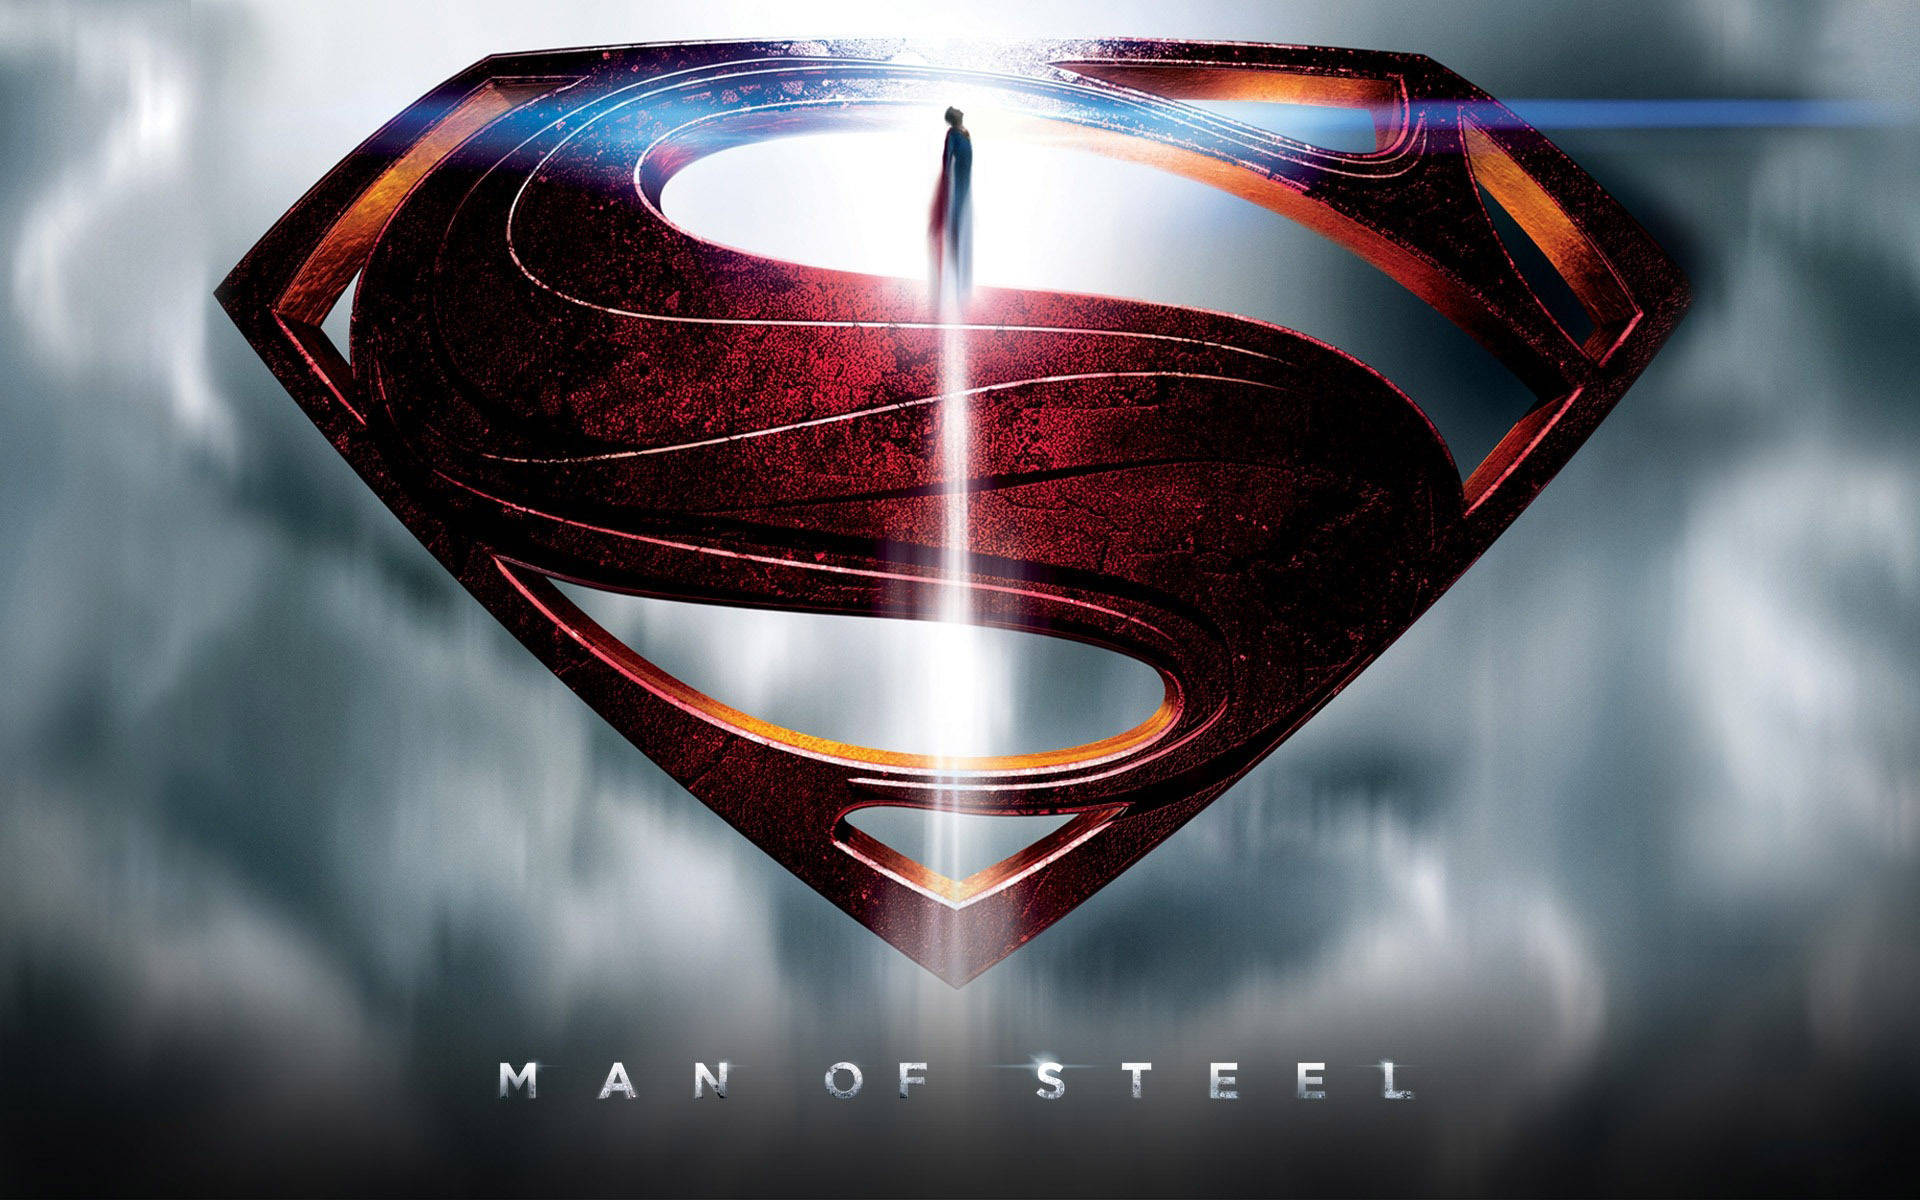 Manof Steel Superman Logo (mann Aus Stahl Superman Logo) Wallpaper